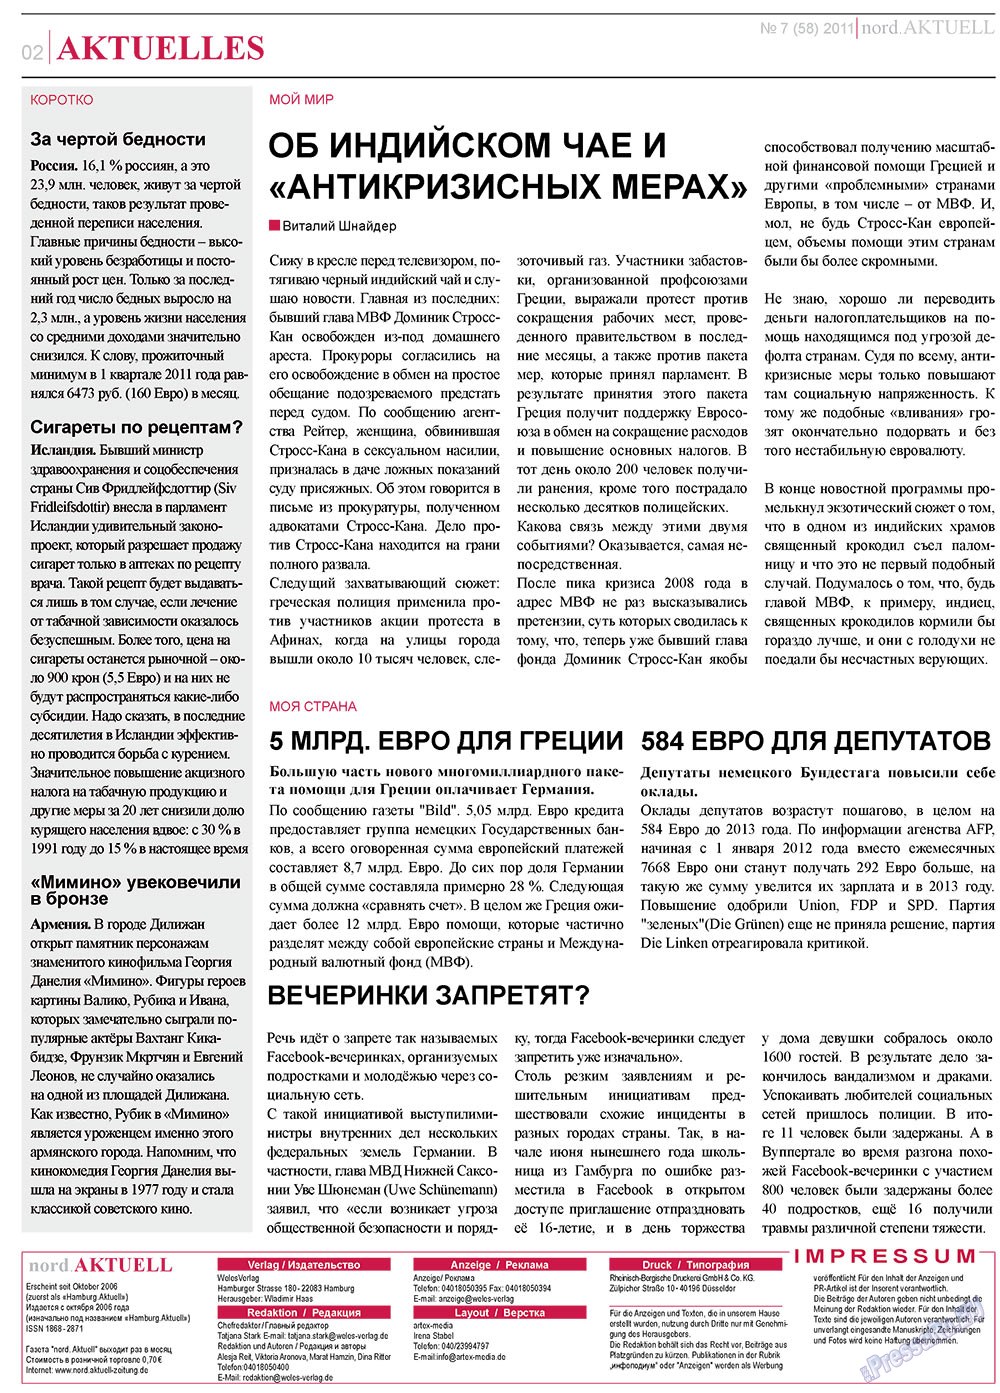 nord.Aktuell, газета. 2011 №7 стр.2